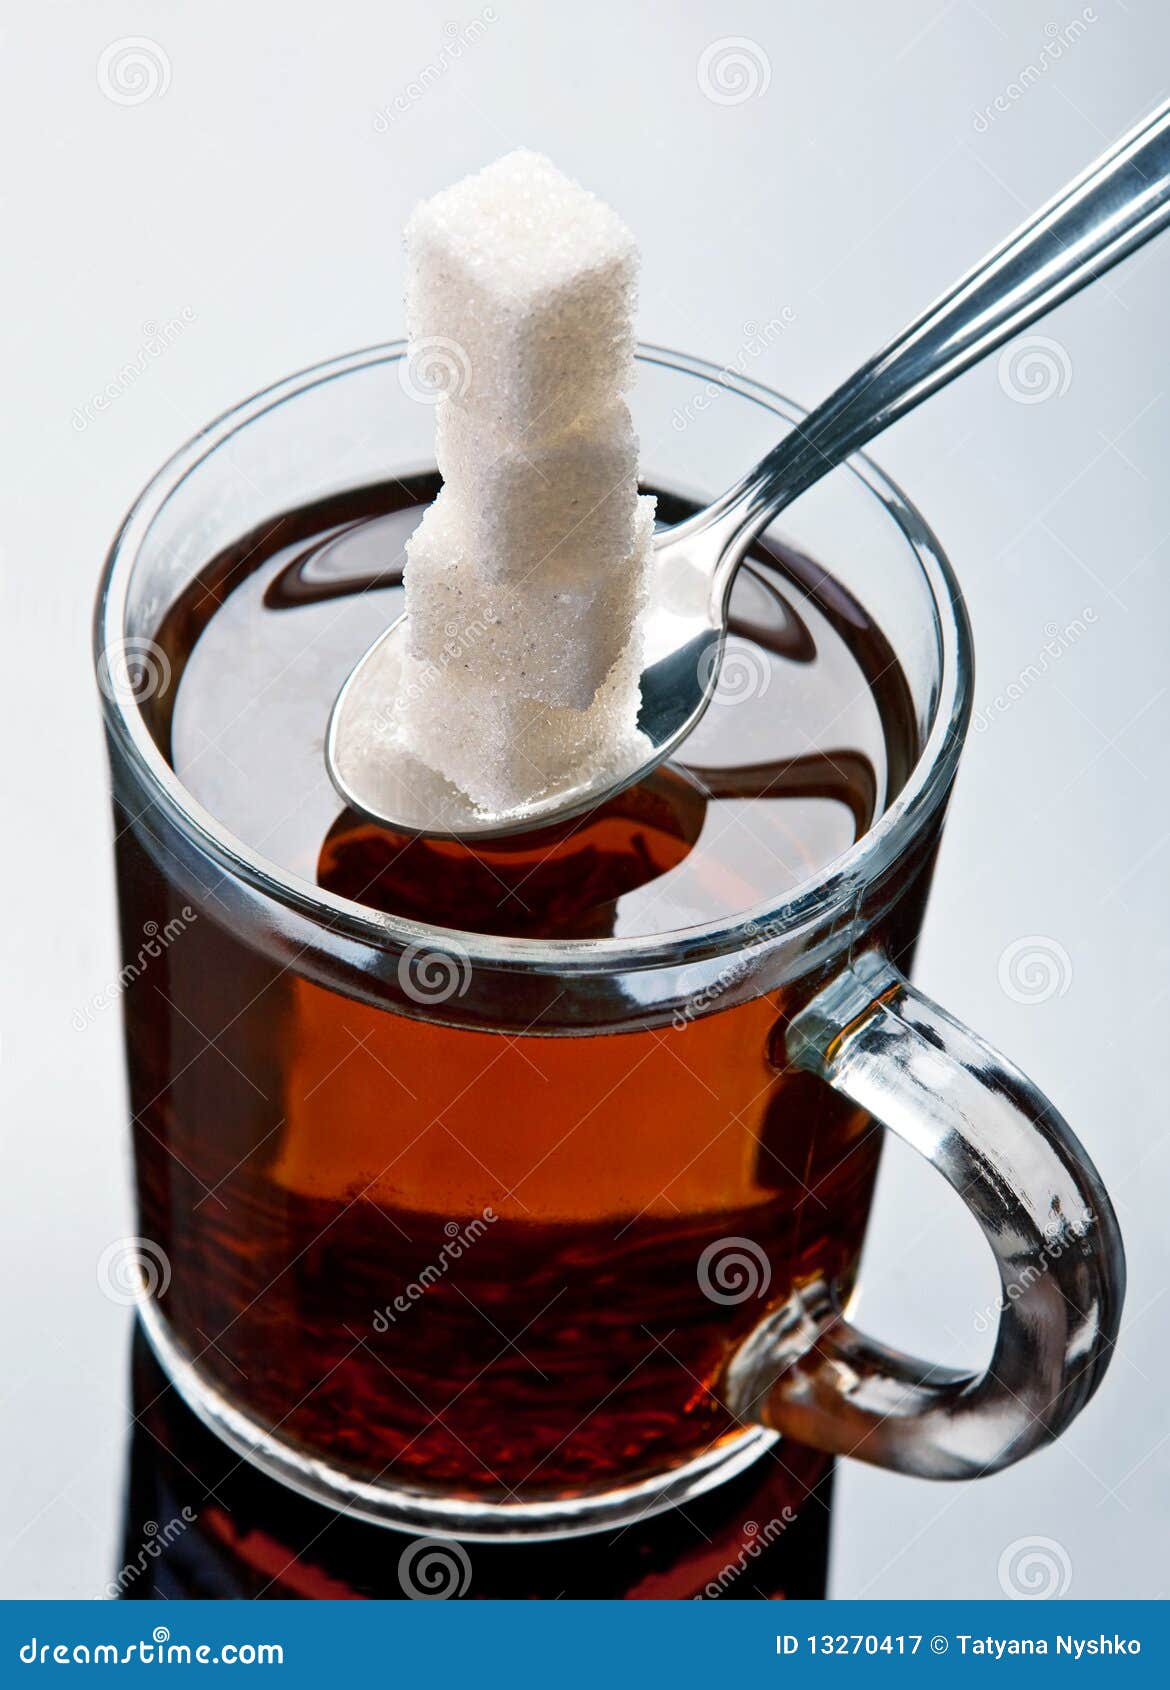 Sugar and tea. 加的饮料特写镜头块糖茶